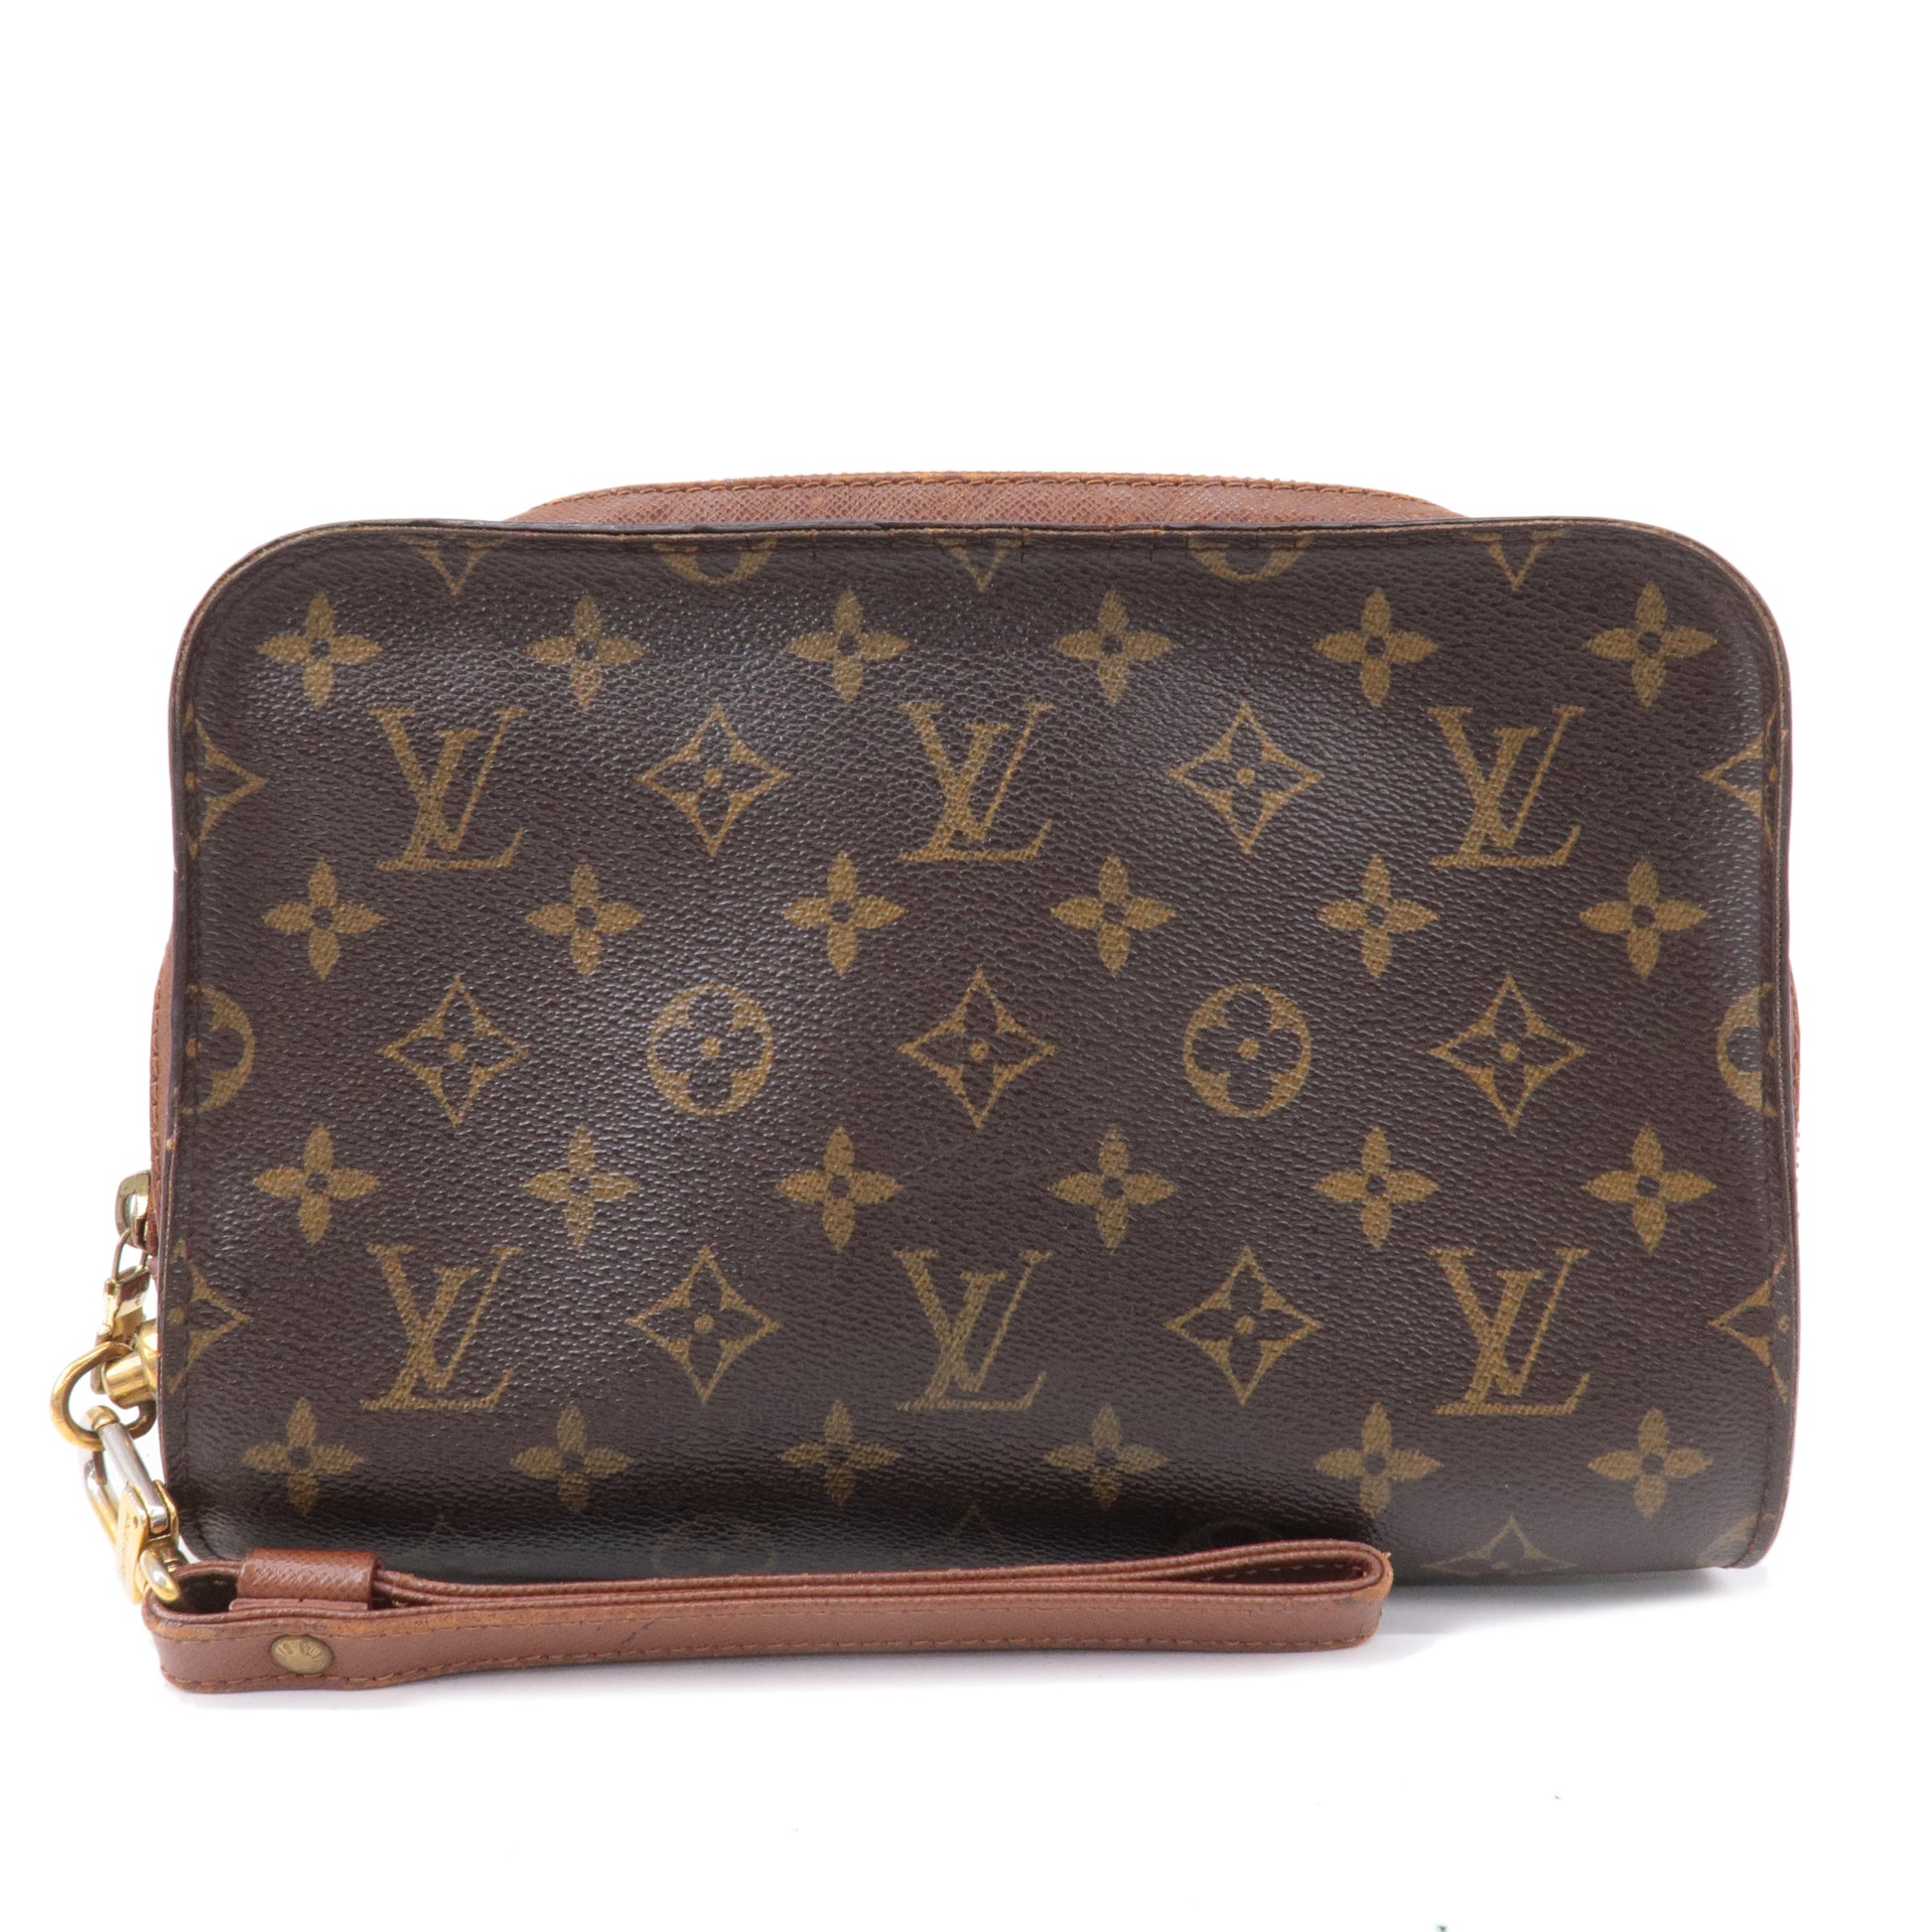 Louis Vuitton Monogram Orsay Clutch Bag wristlet